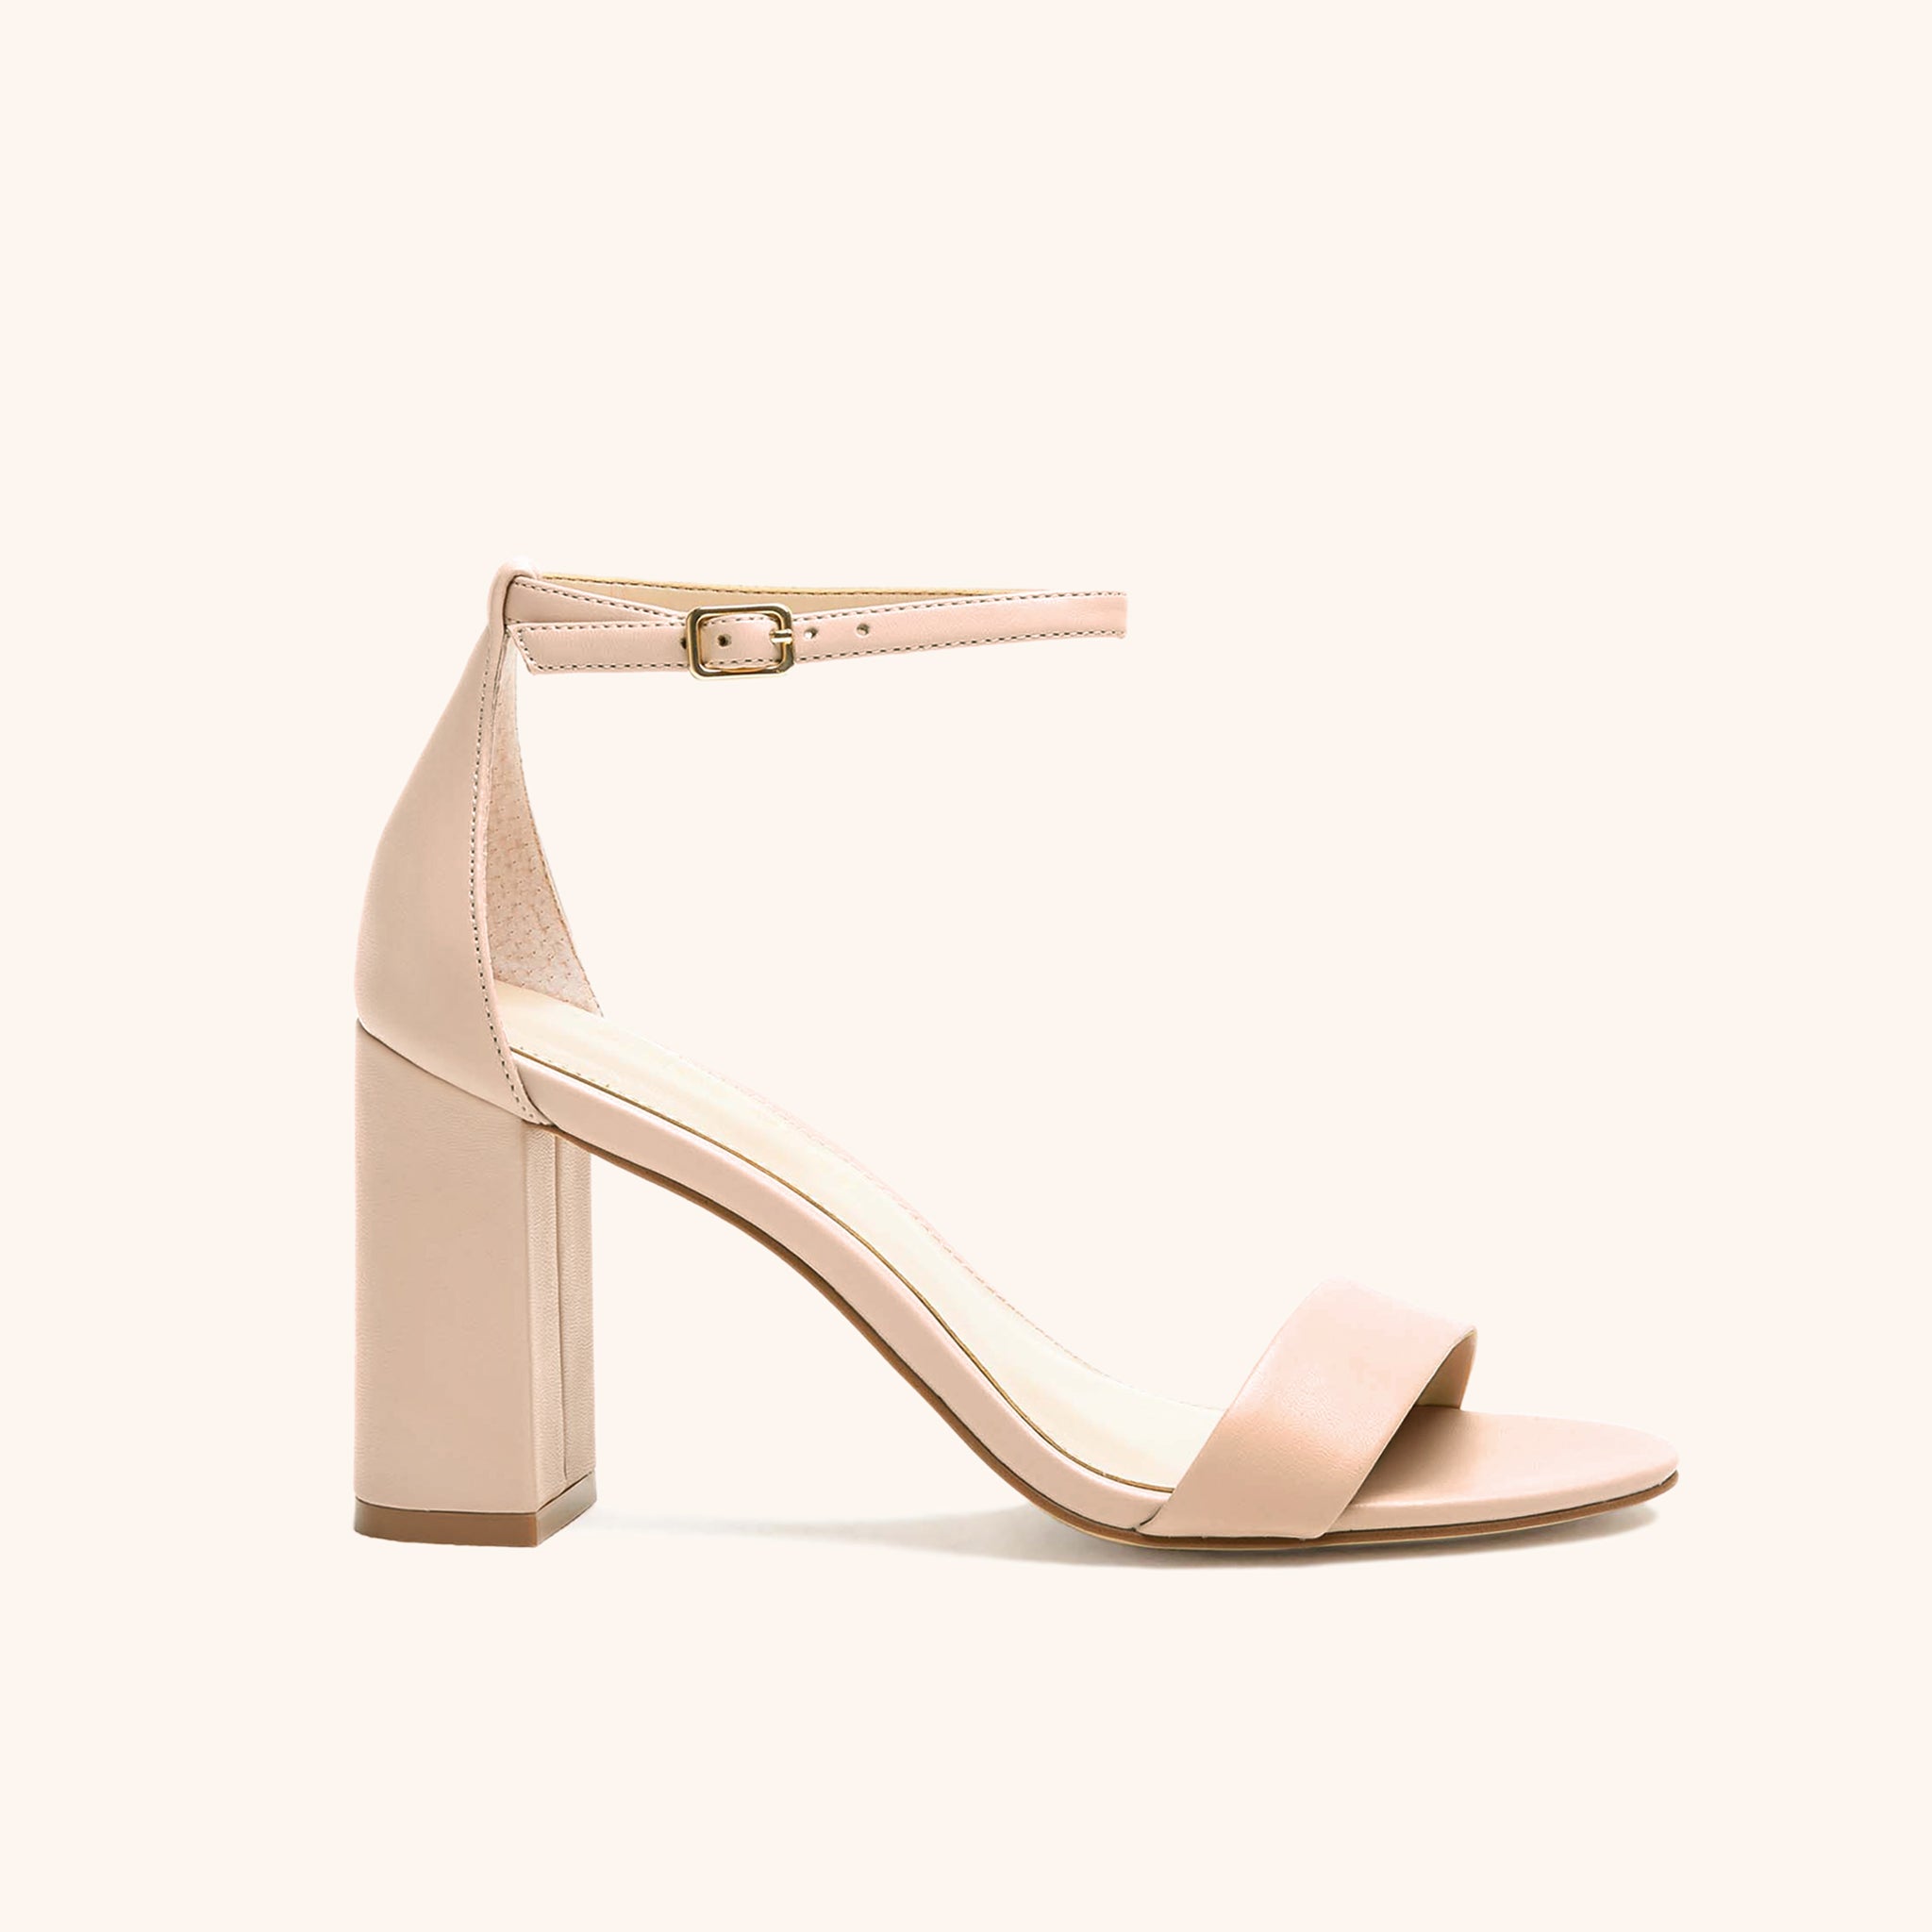 Audrey Brooke Platform Shoes, 5 inch Heels Women Size… - Gem